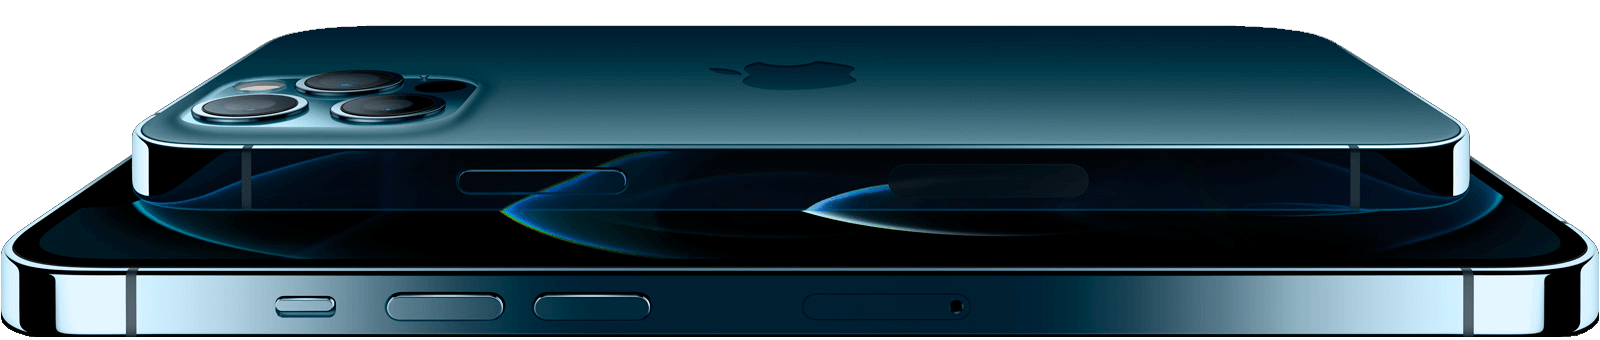 Oferta iPhone 12 Pro Max Azul Pacífico